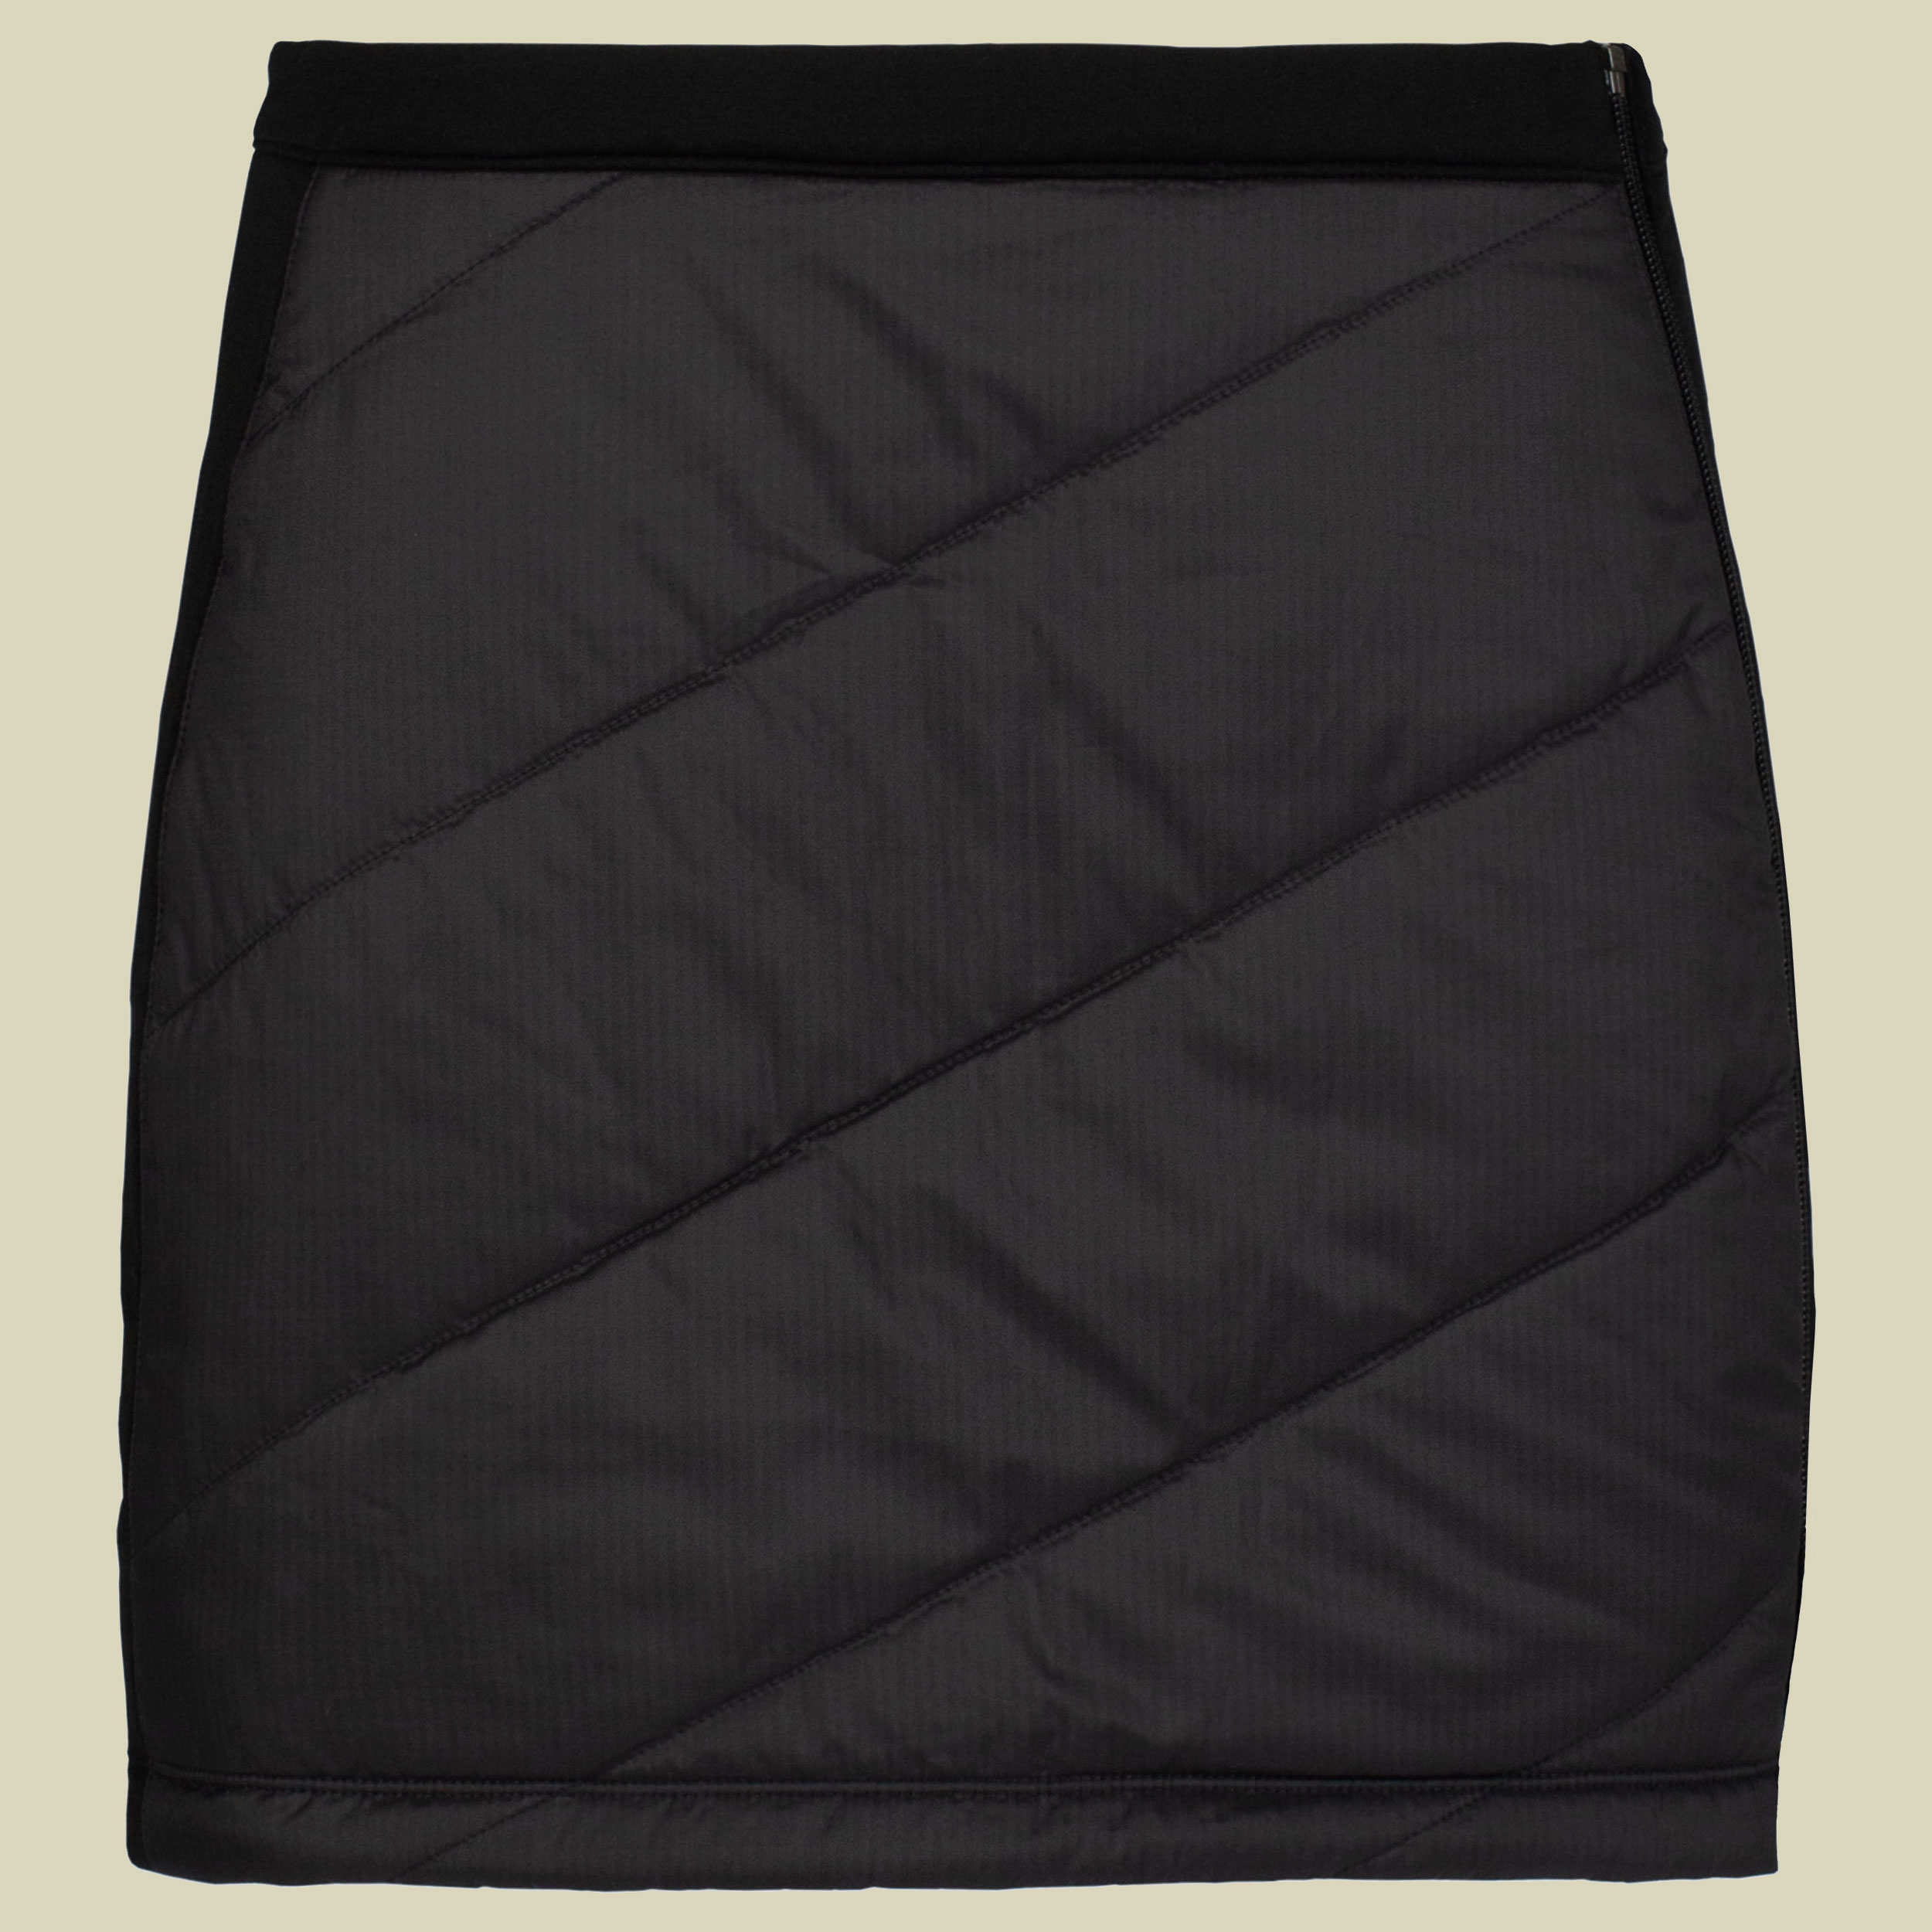 Helix Mini Skirt Women Größe S Farbe black